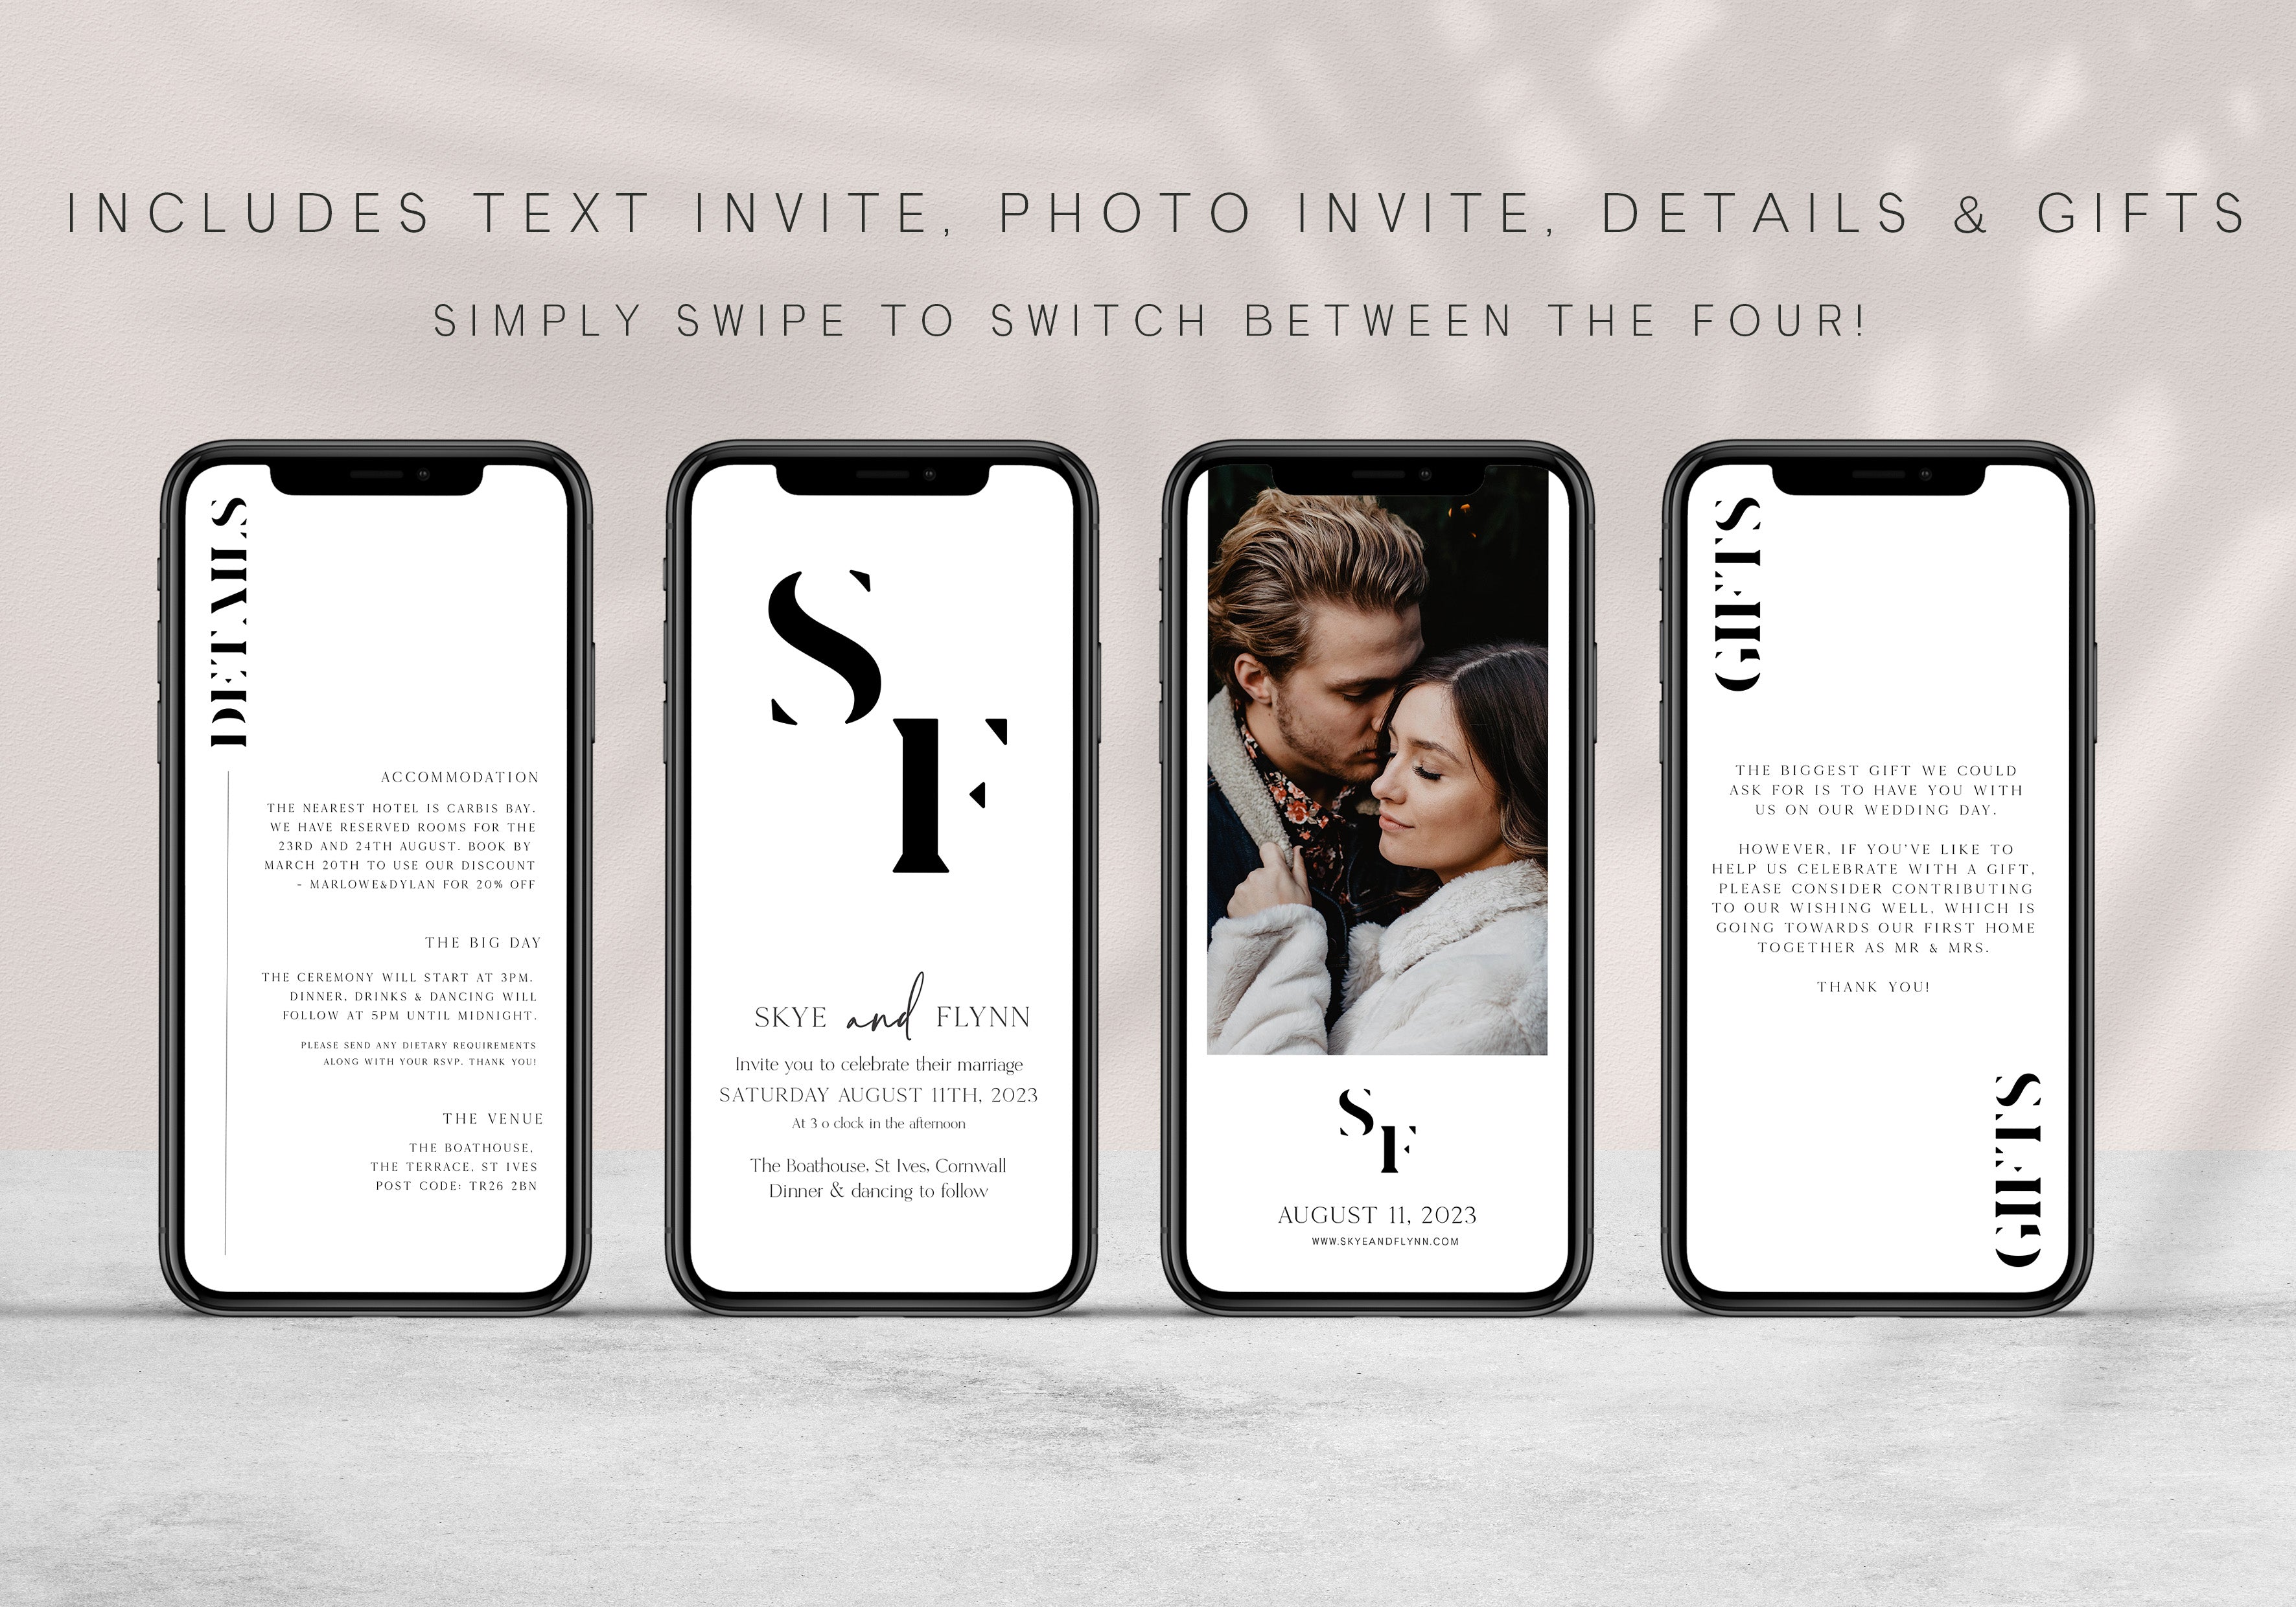 editable wedding invitation suite, mobile wedding invitation suite, wedding suite, wedding invitations, editable wedding invitations